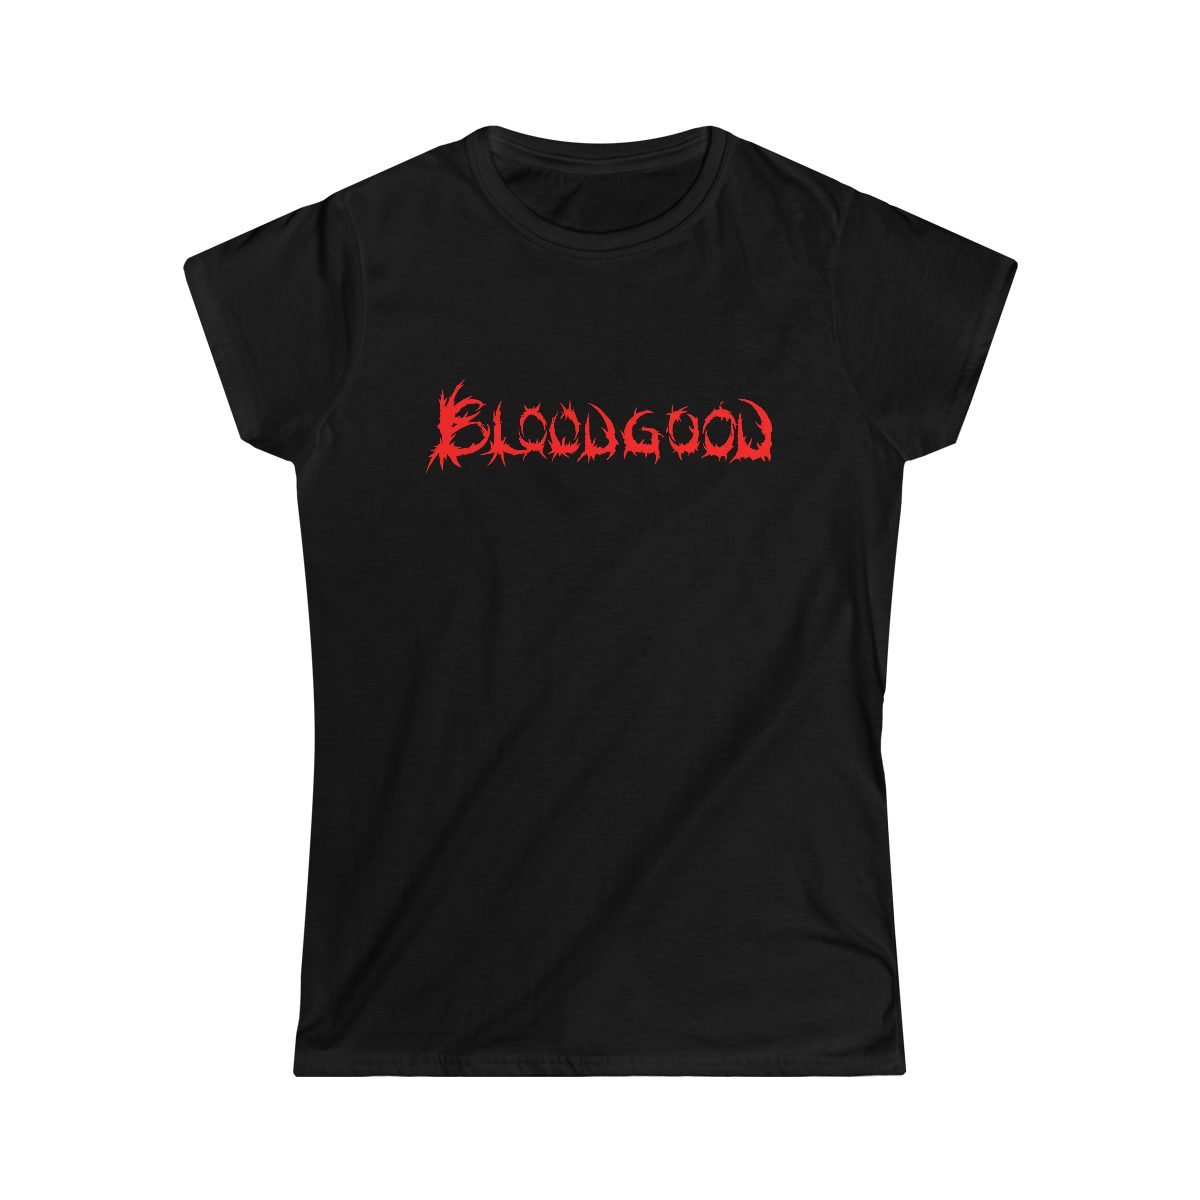 Bloodgood Red Logo Women’s Short Sleeve Tshirt 64000L